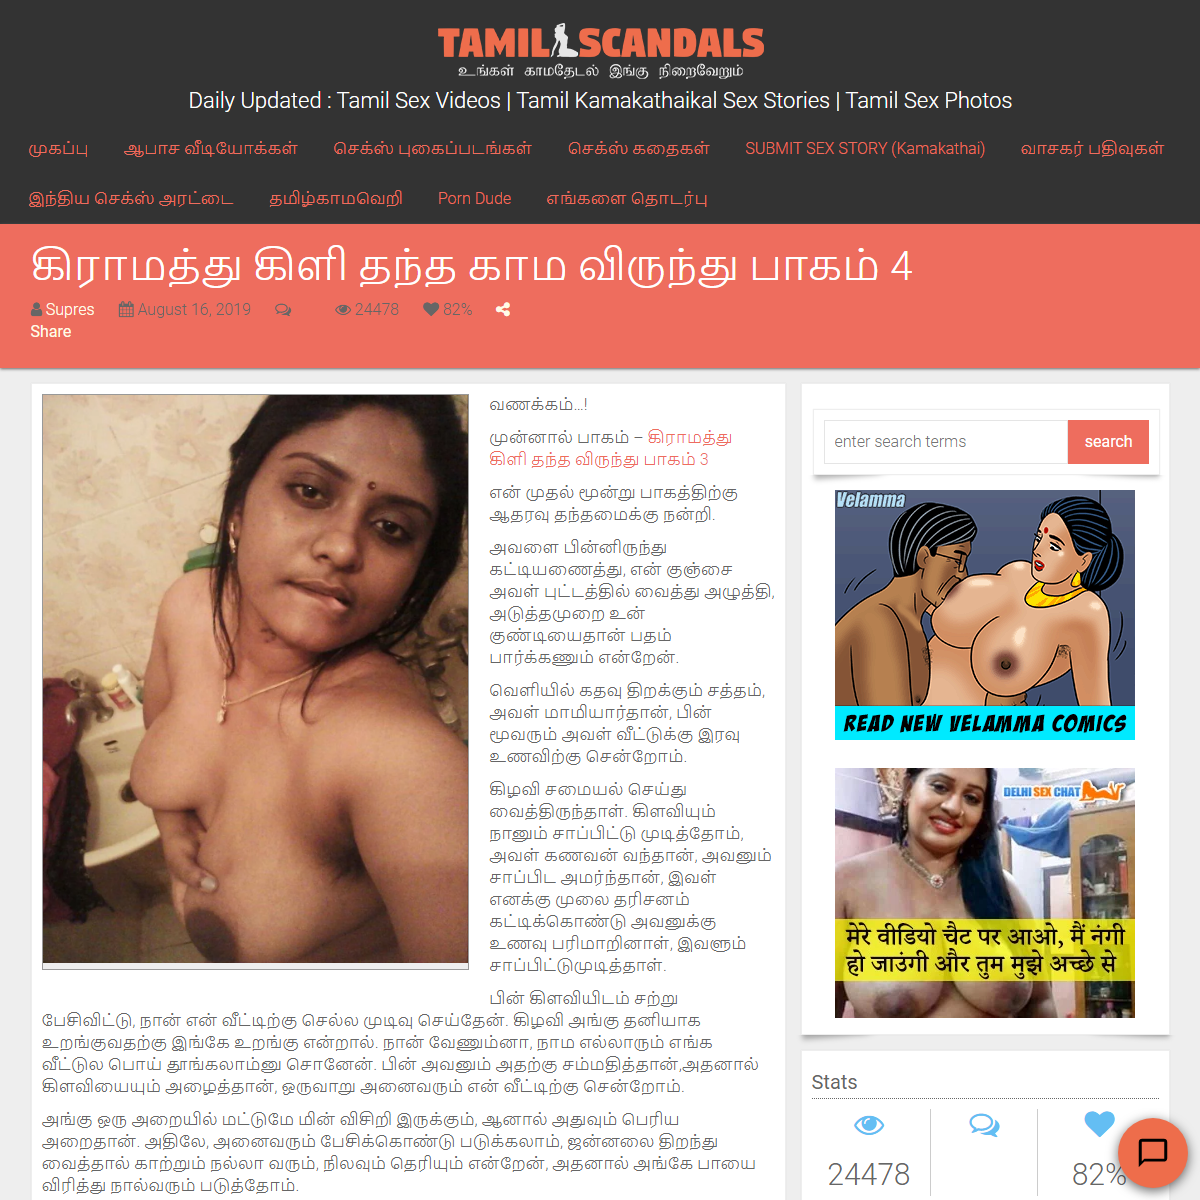 A complete backup of https://www.tamilscandals.com/village/kiramathu-kanni-kamakathai/